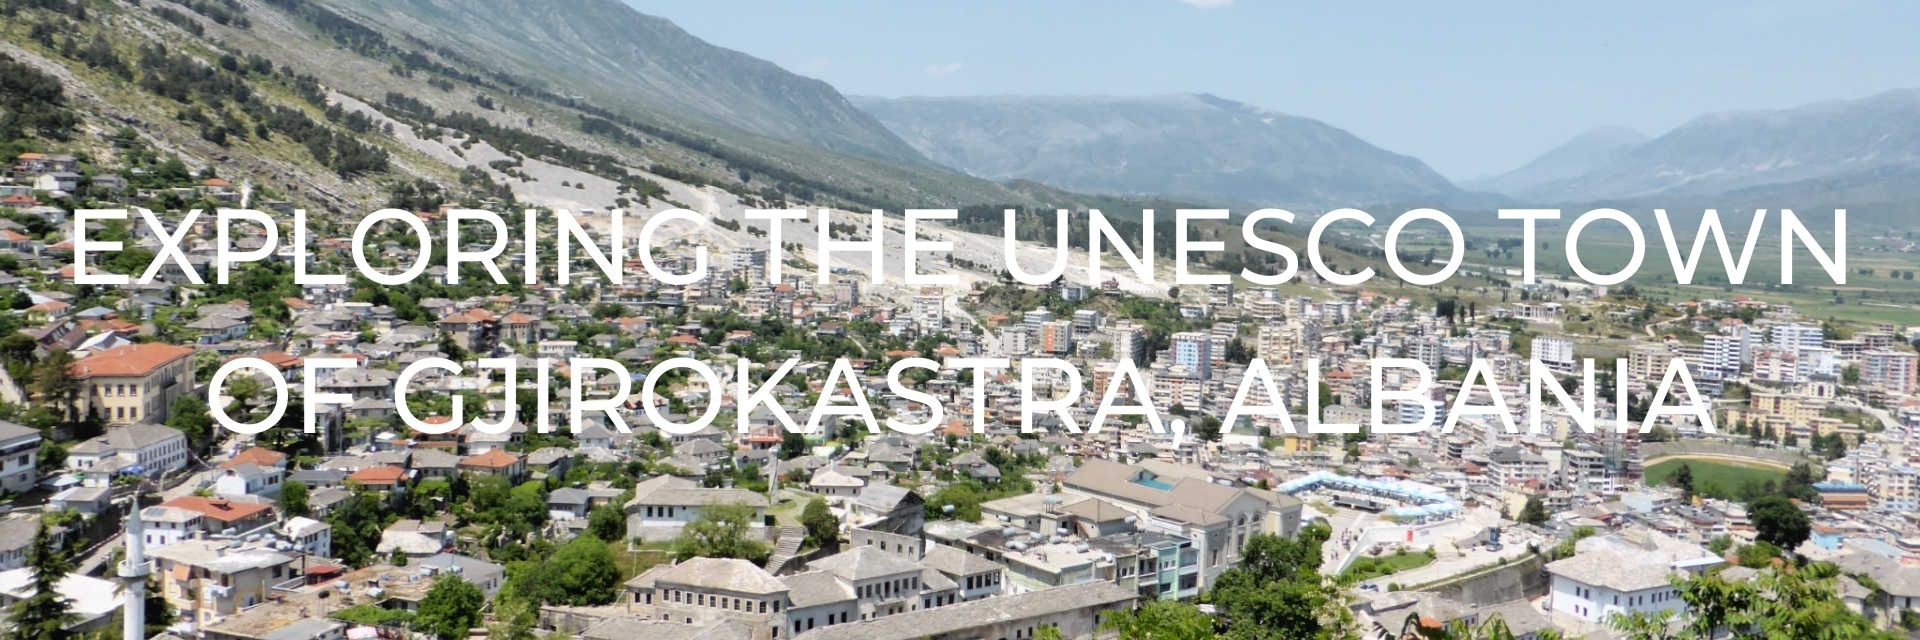 Exploring the UNESCO Town of Gjirokastra, Albania Desktop Header.